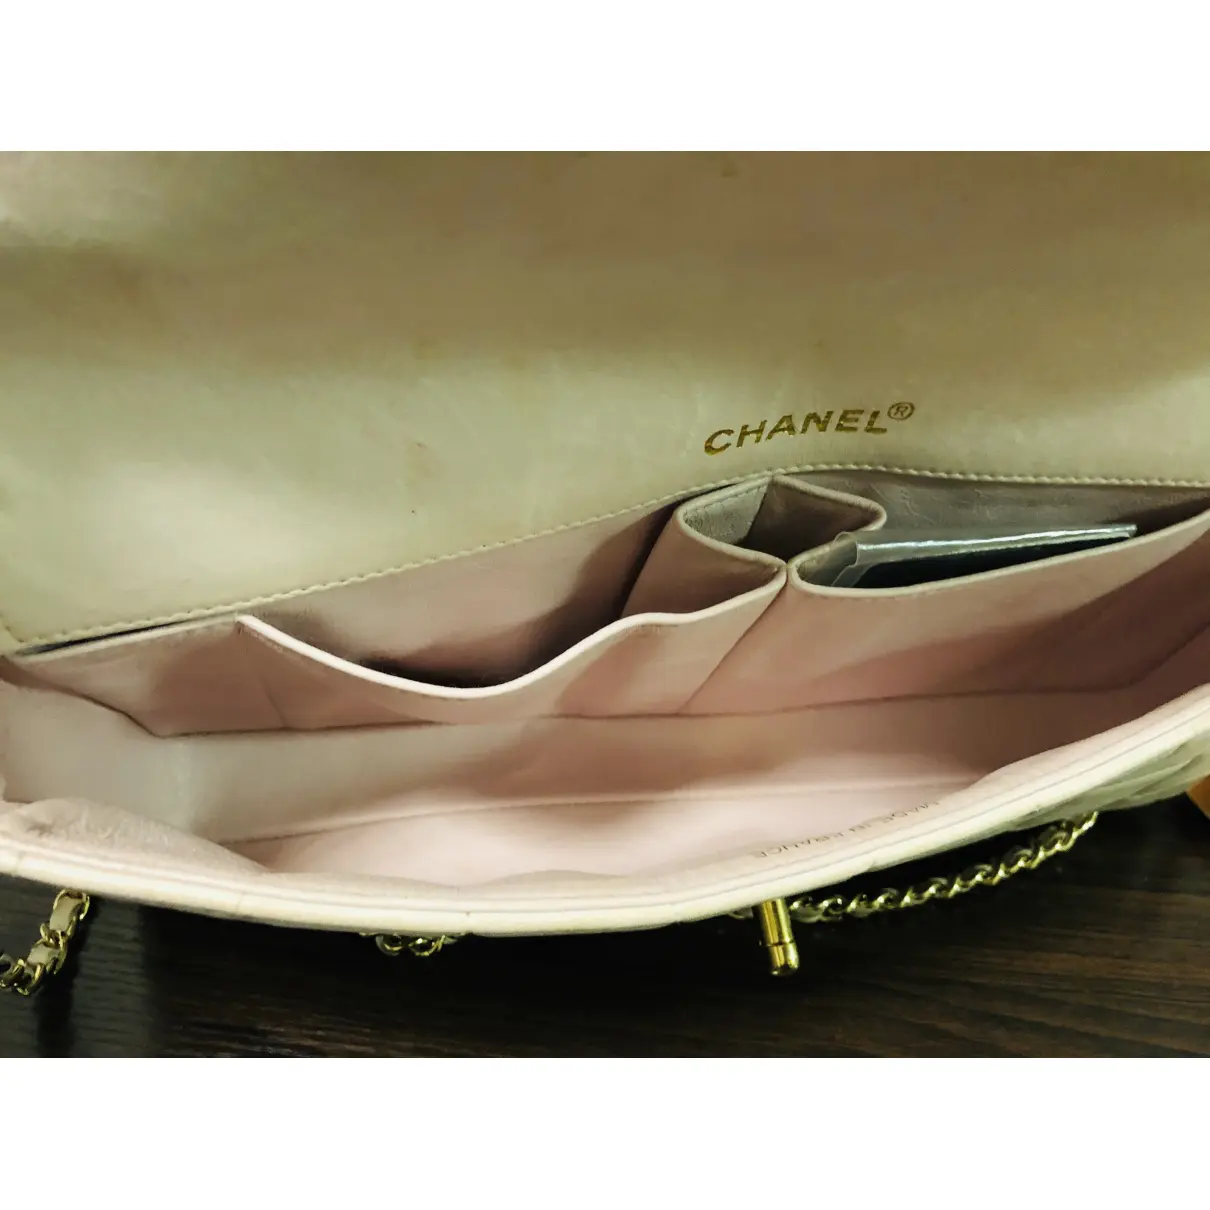 East West Chocolate Bar leather handbag Chanel